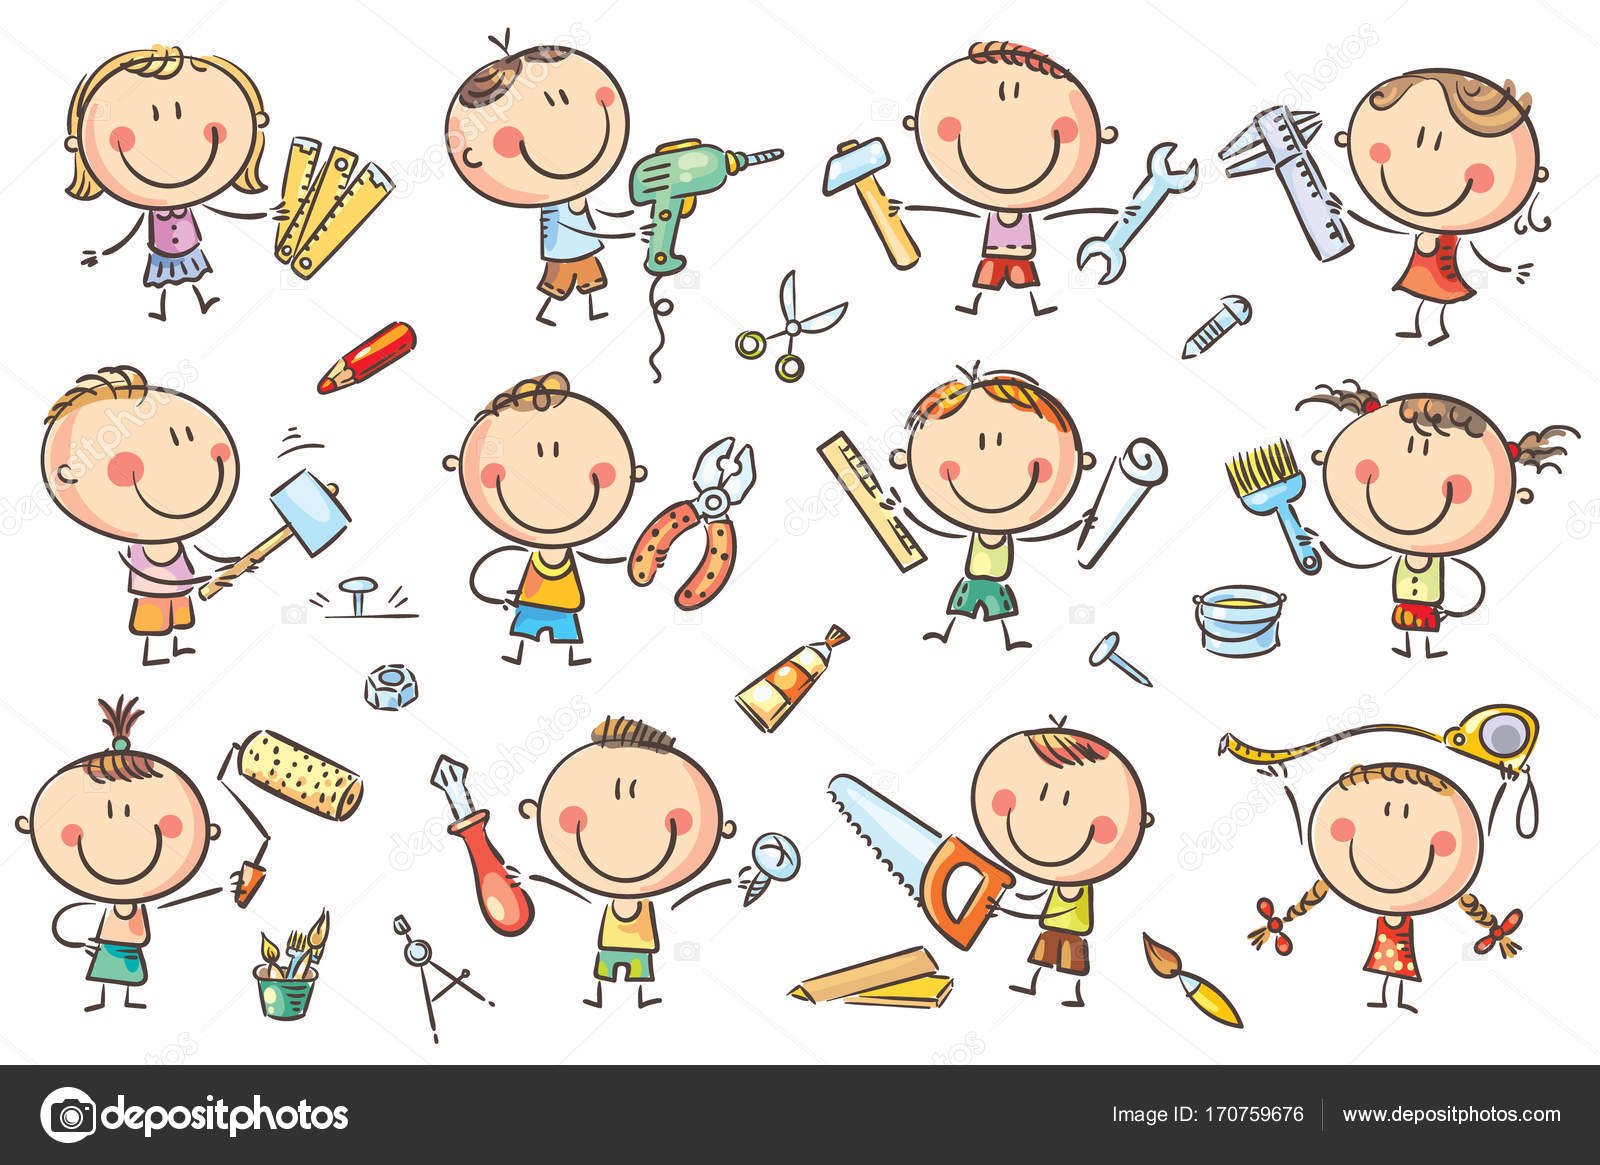 https://st3.depositphotos.com/3827765/17075/v/1600/depositphotos_170759676-stock-illustration-kids-with-tools.jpg